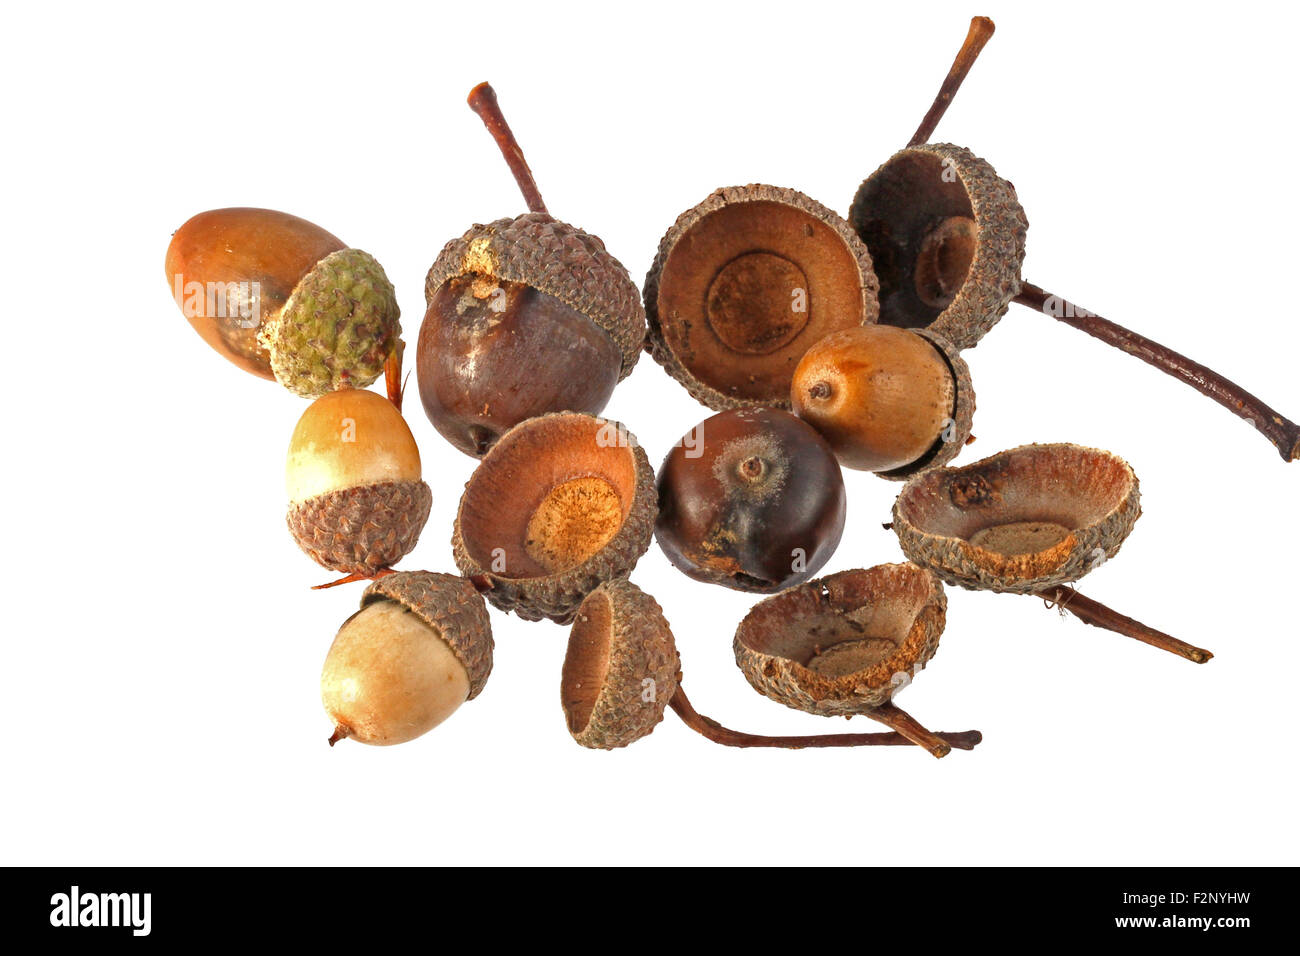 Close up photo of acorns on a plain white background. Stock Photo